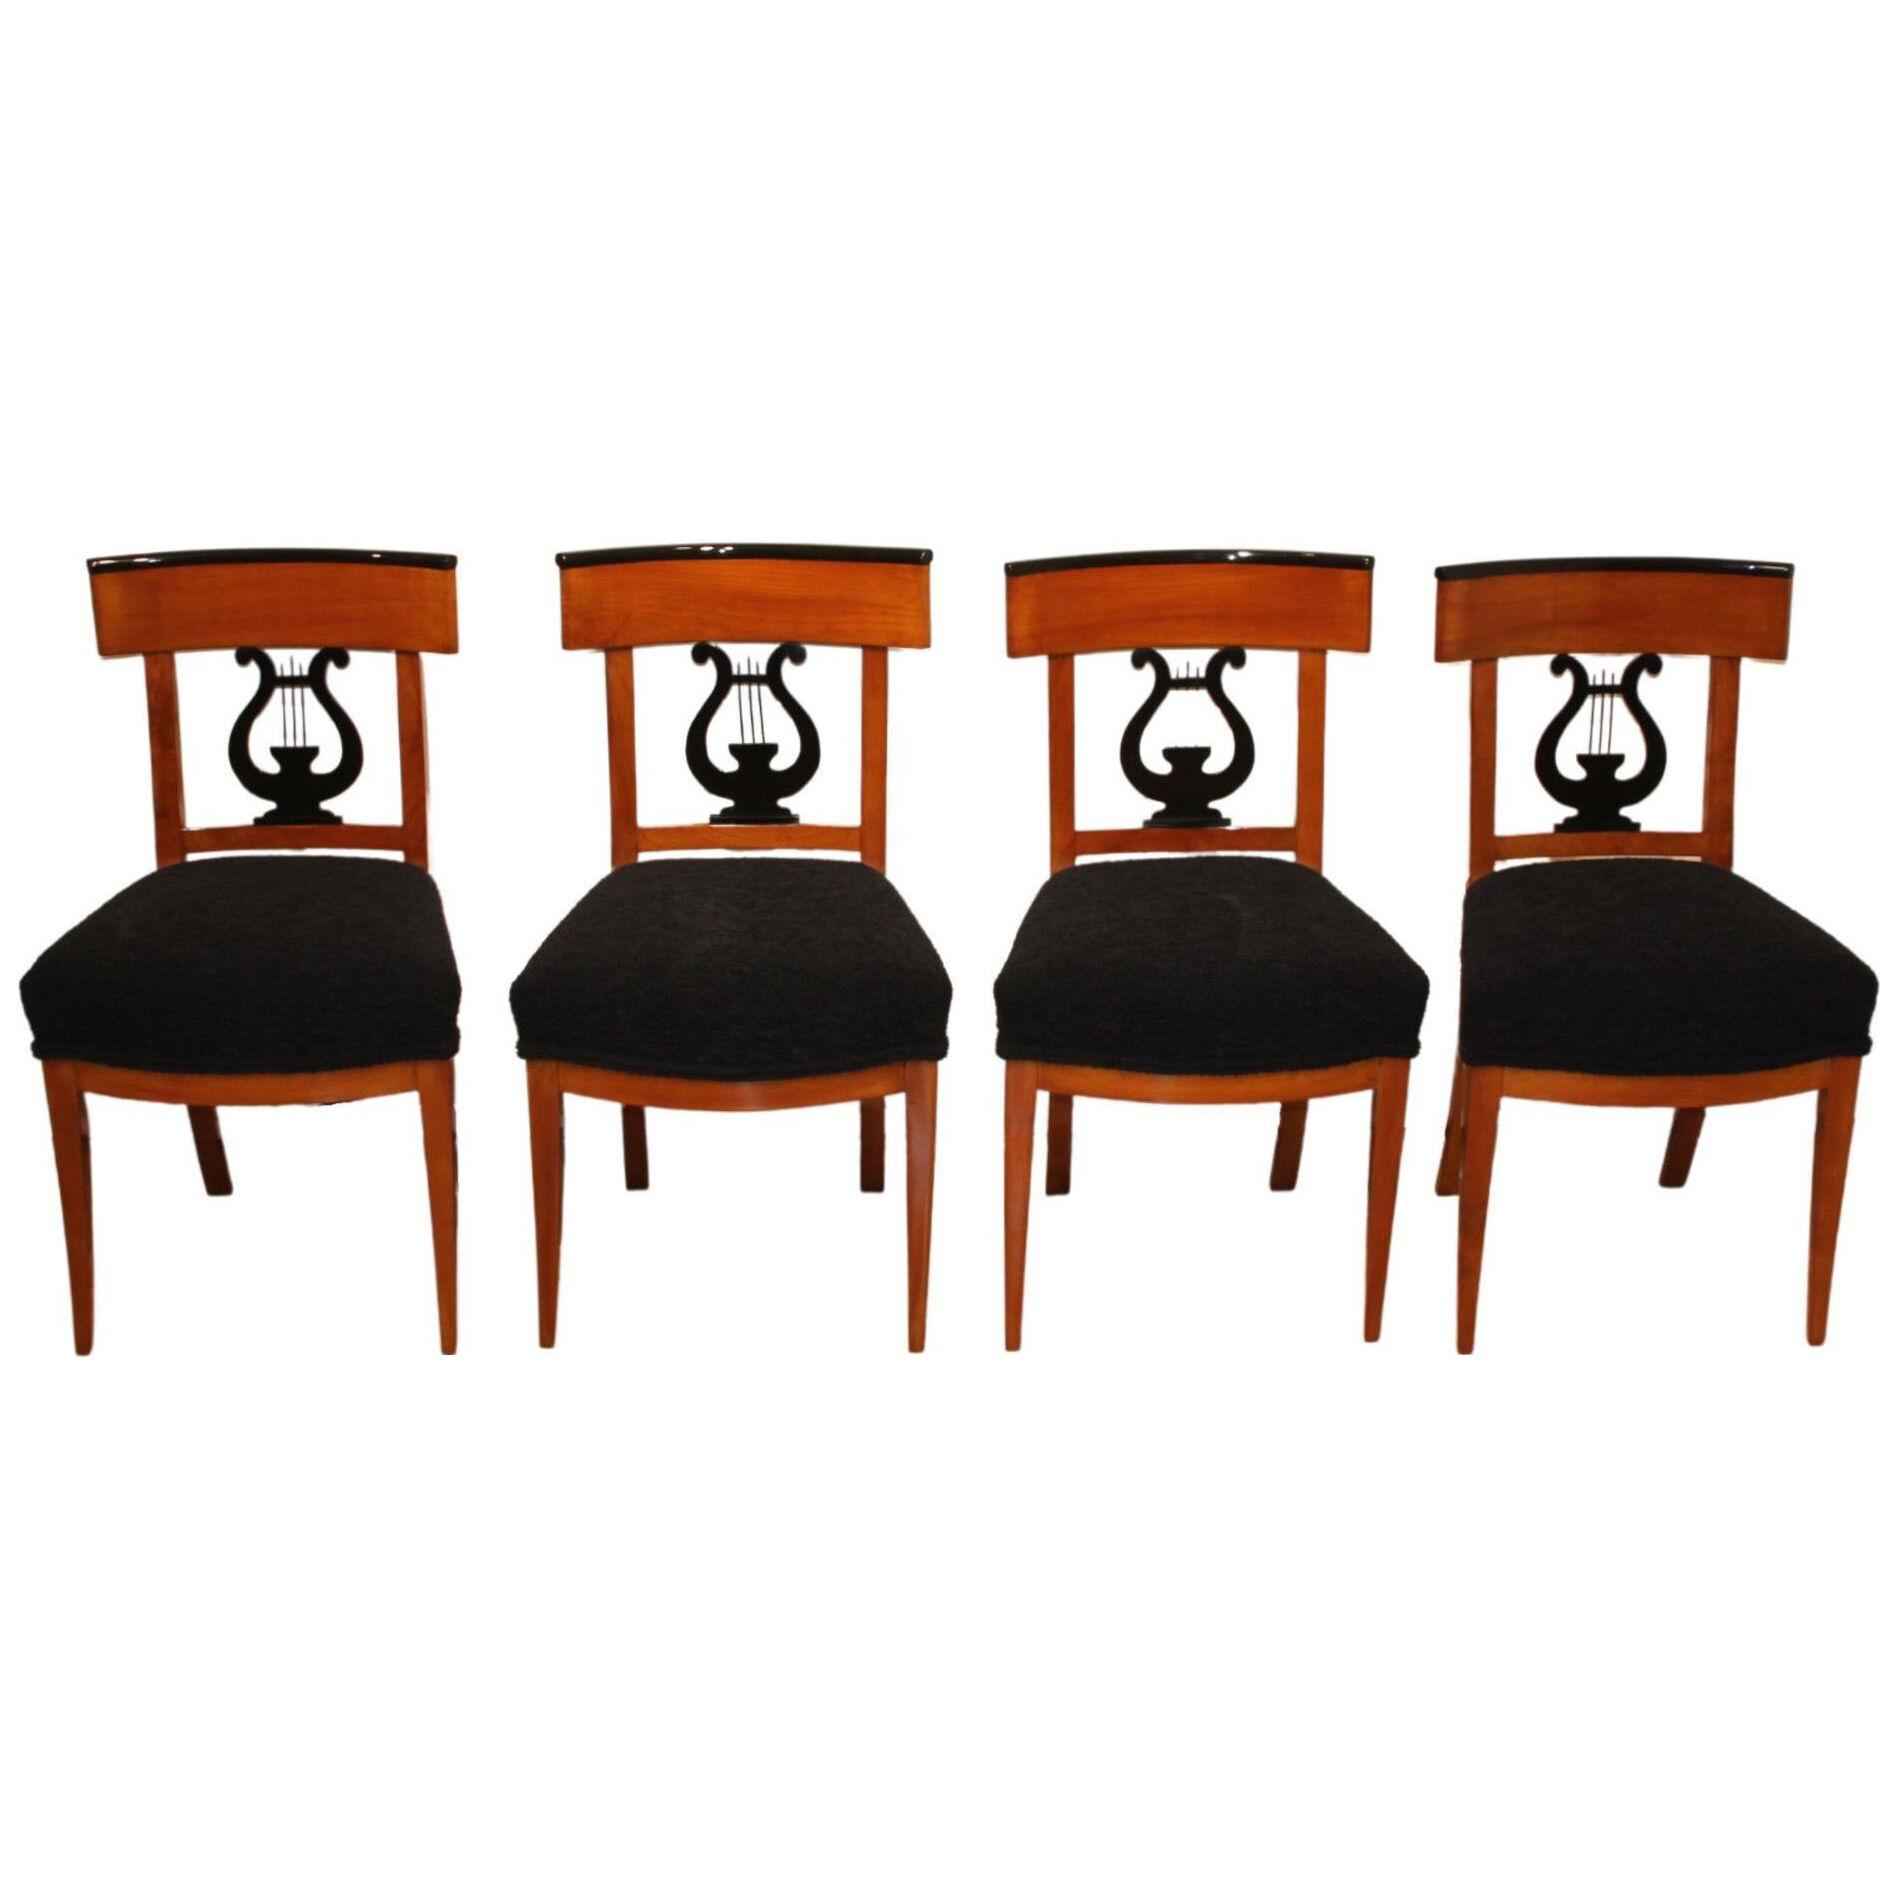 Set of Four Biedermeier Chairs, Cherry Wood, South Germany circa 1830